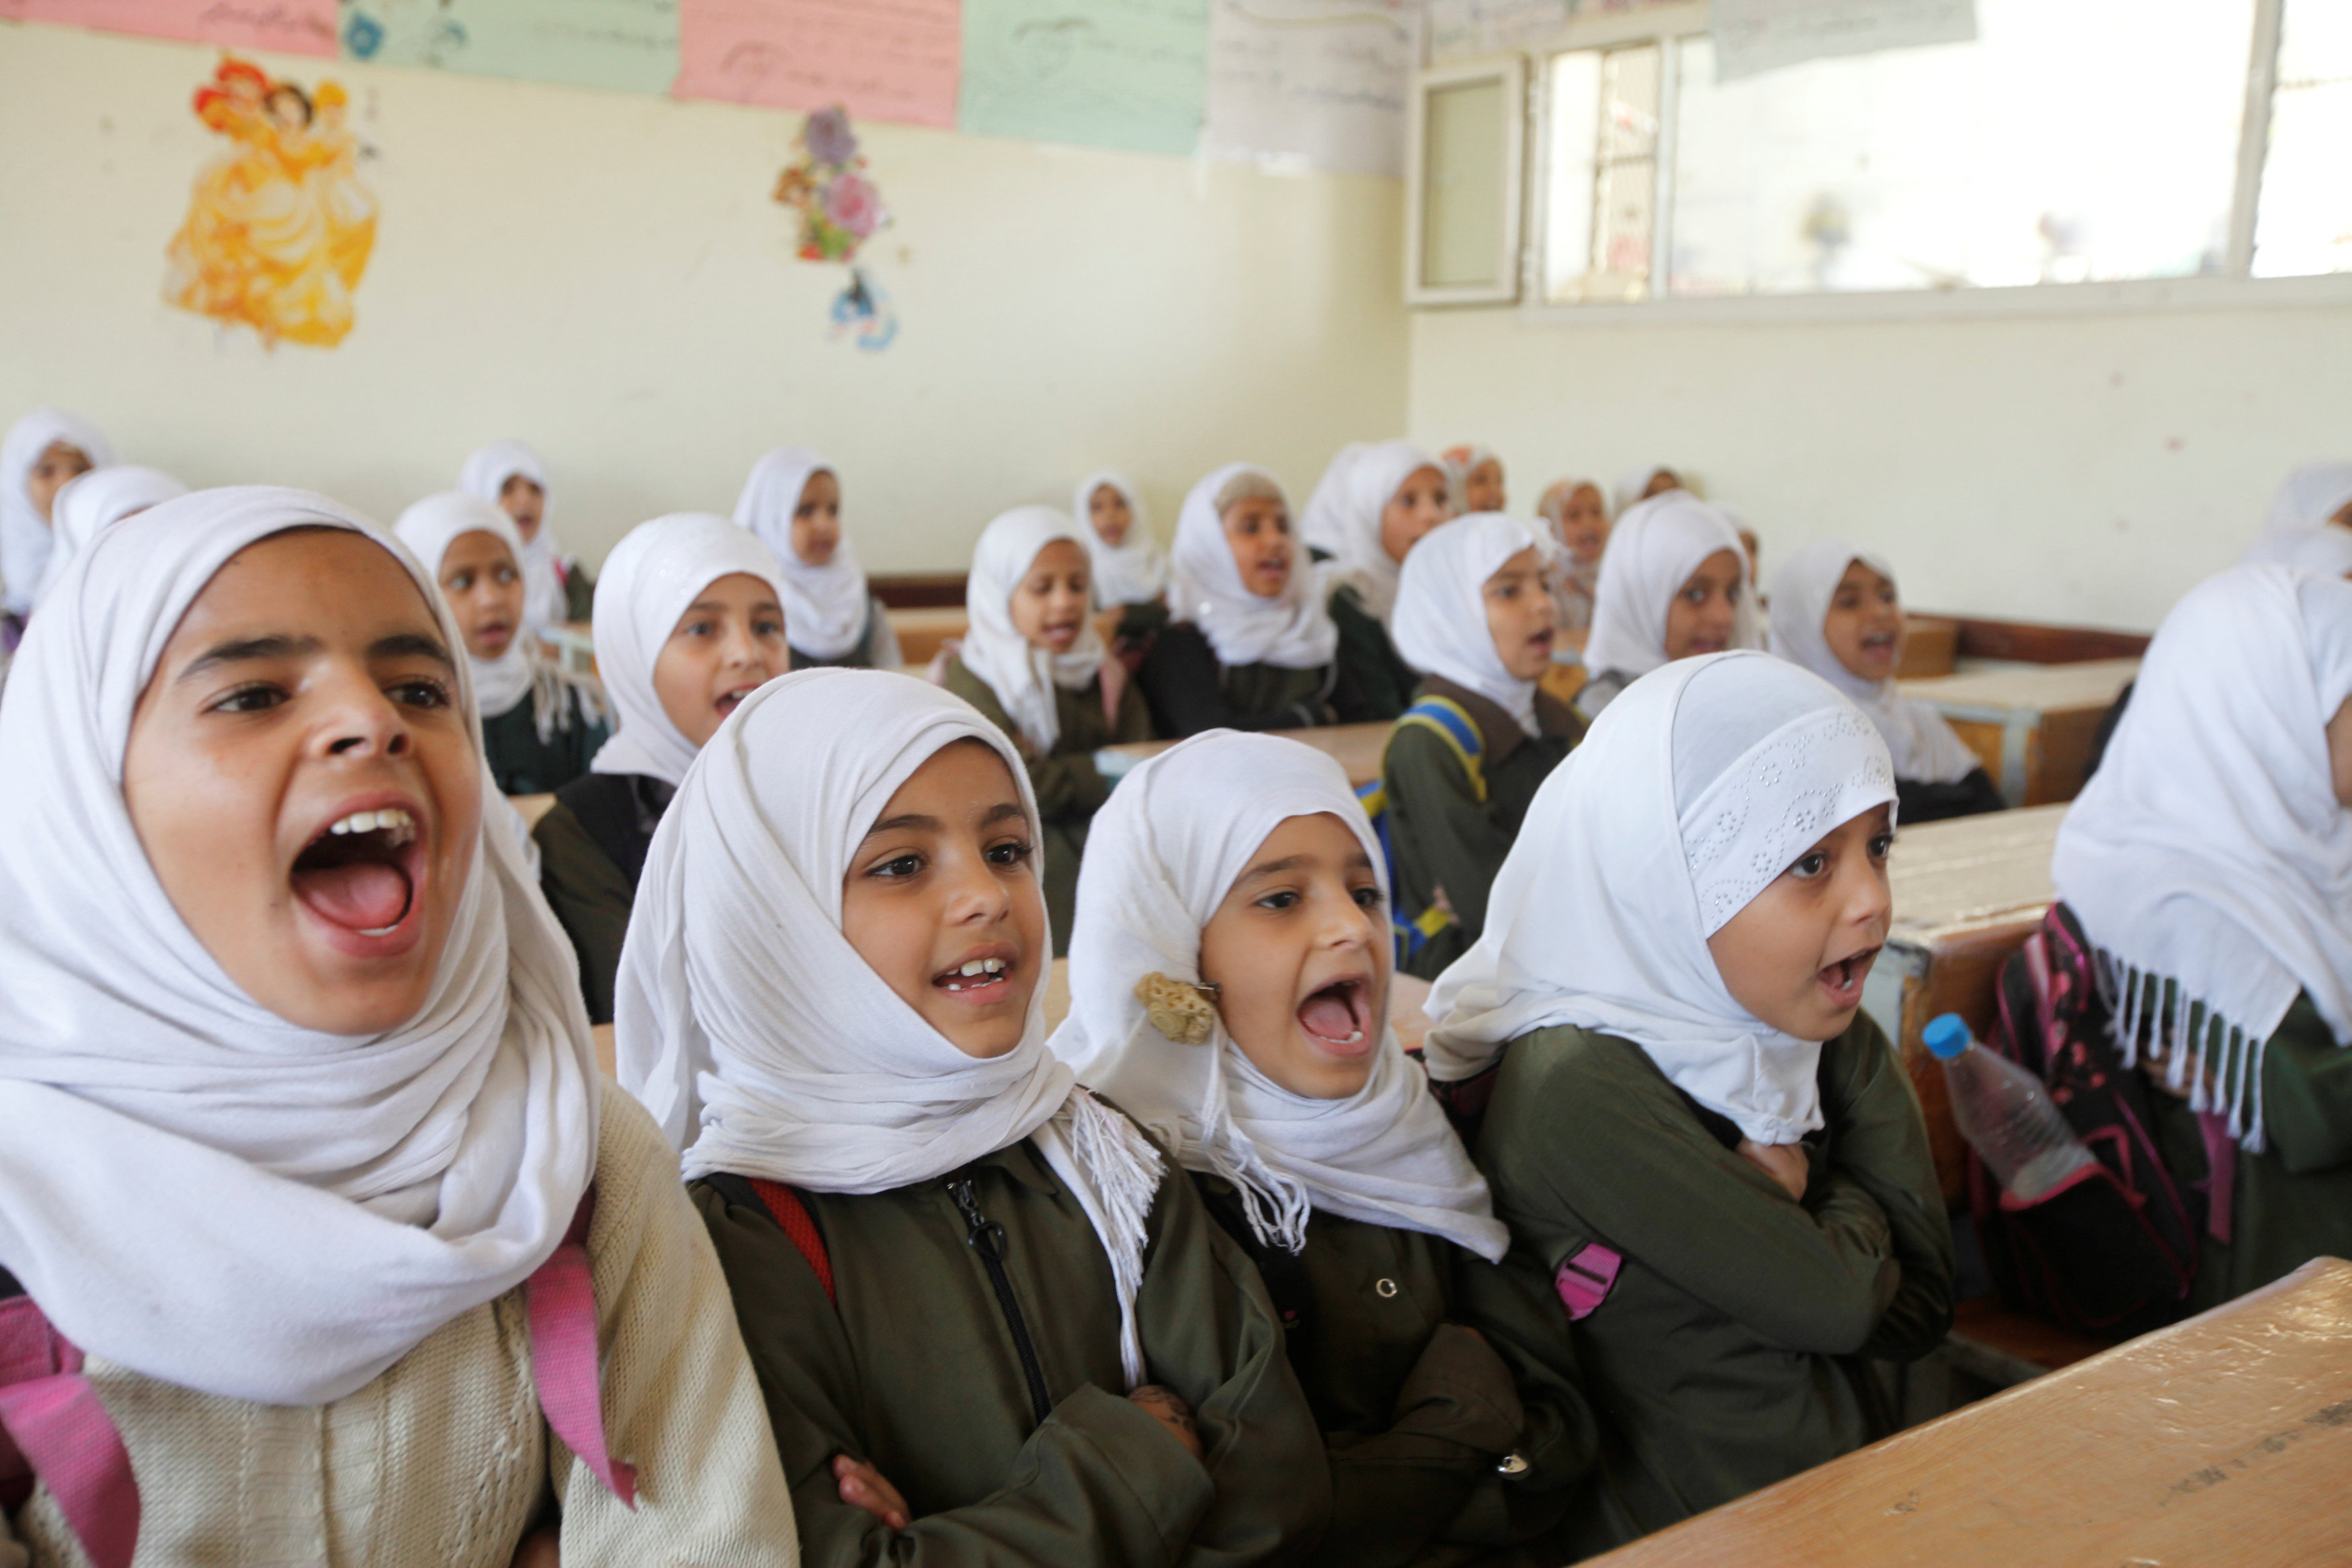 Wartime economic crisis threatens education of millions of Yemeni children: U.N.